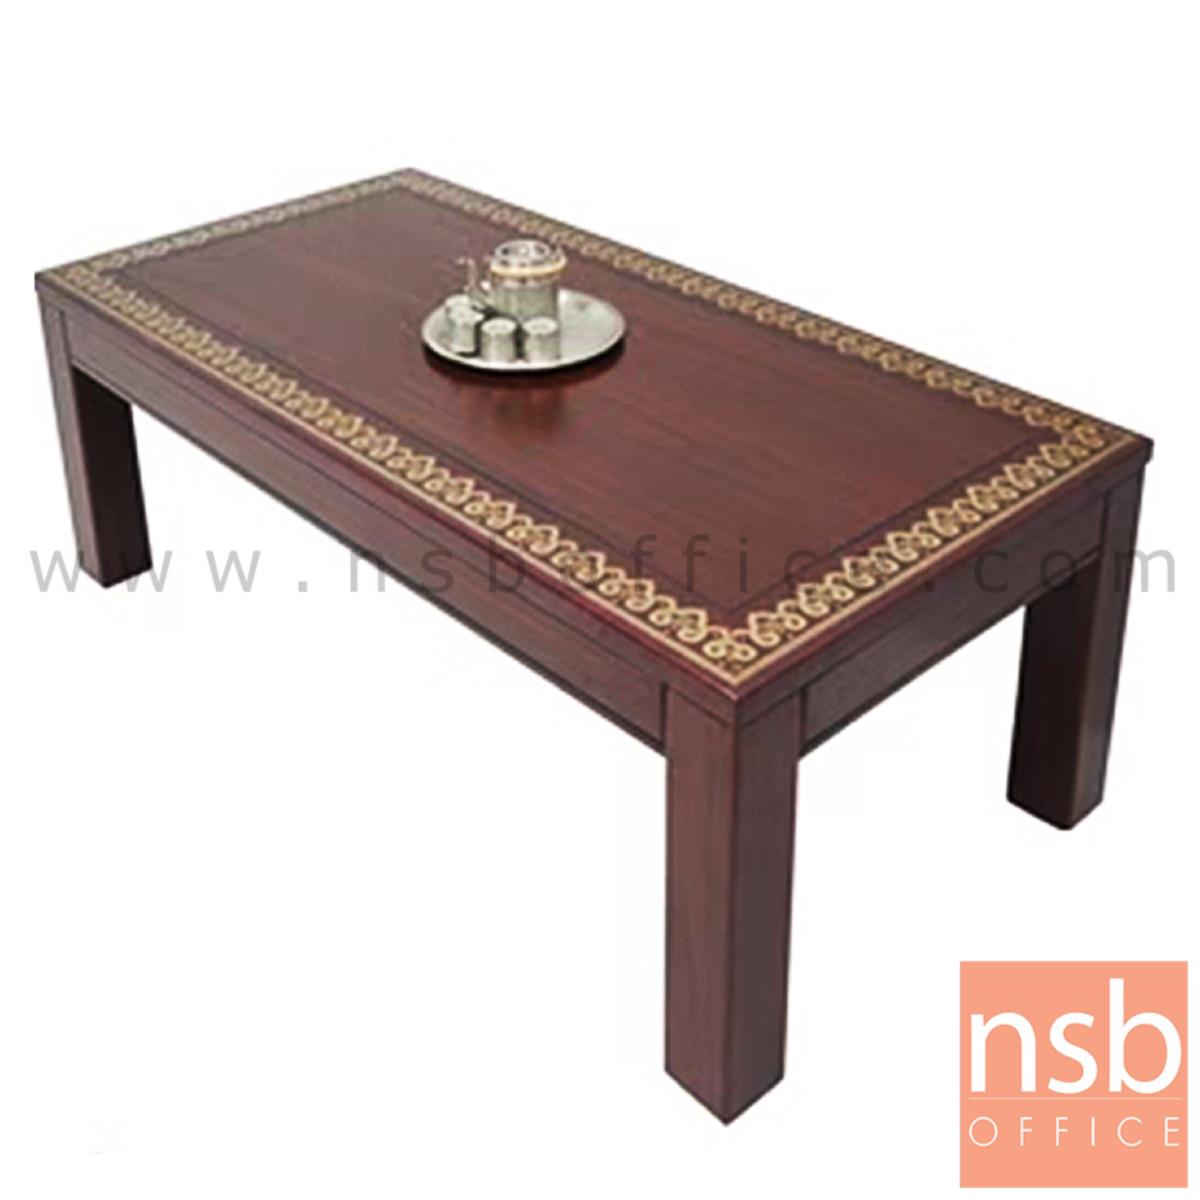 B13A280:โต๊ะกลางไม้จริง รุ่น Valorant ขนาด 60W, 120W cm. ขาไม้